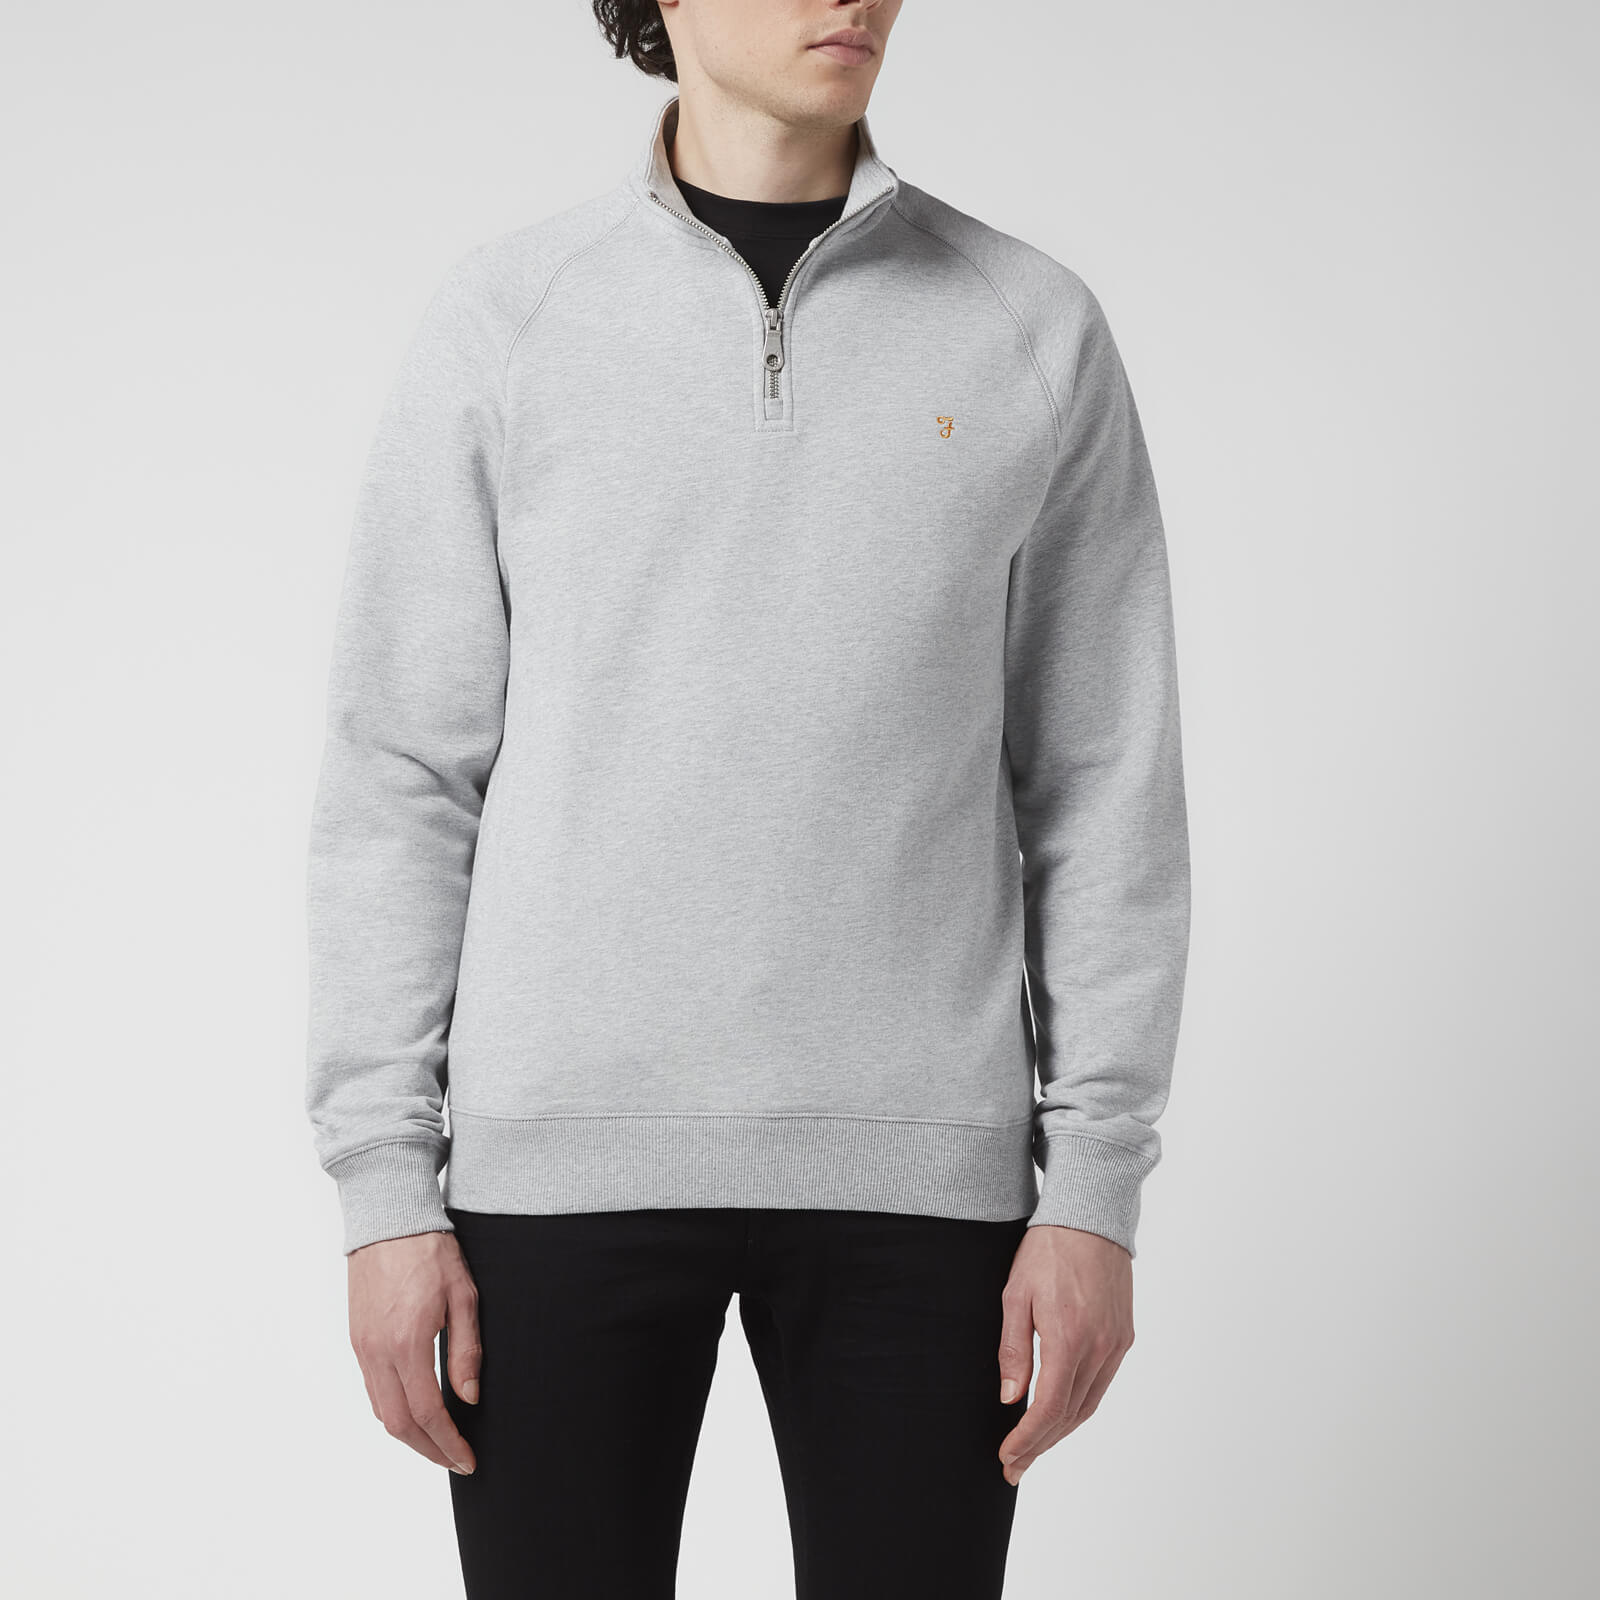 Farah Men's Jim Quarter Zip Sweatshirt - Light Grey Marl - Xxl